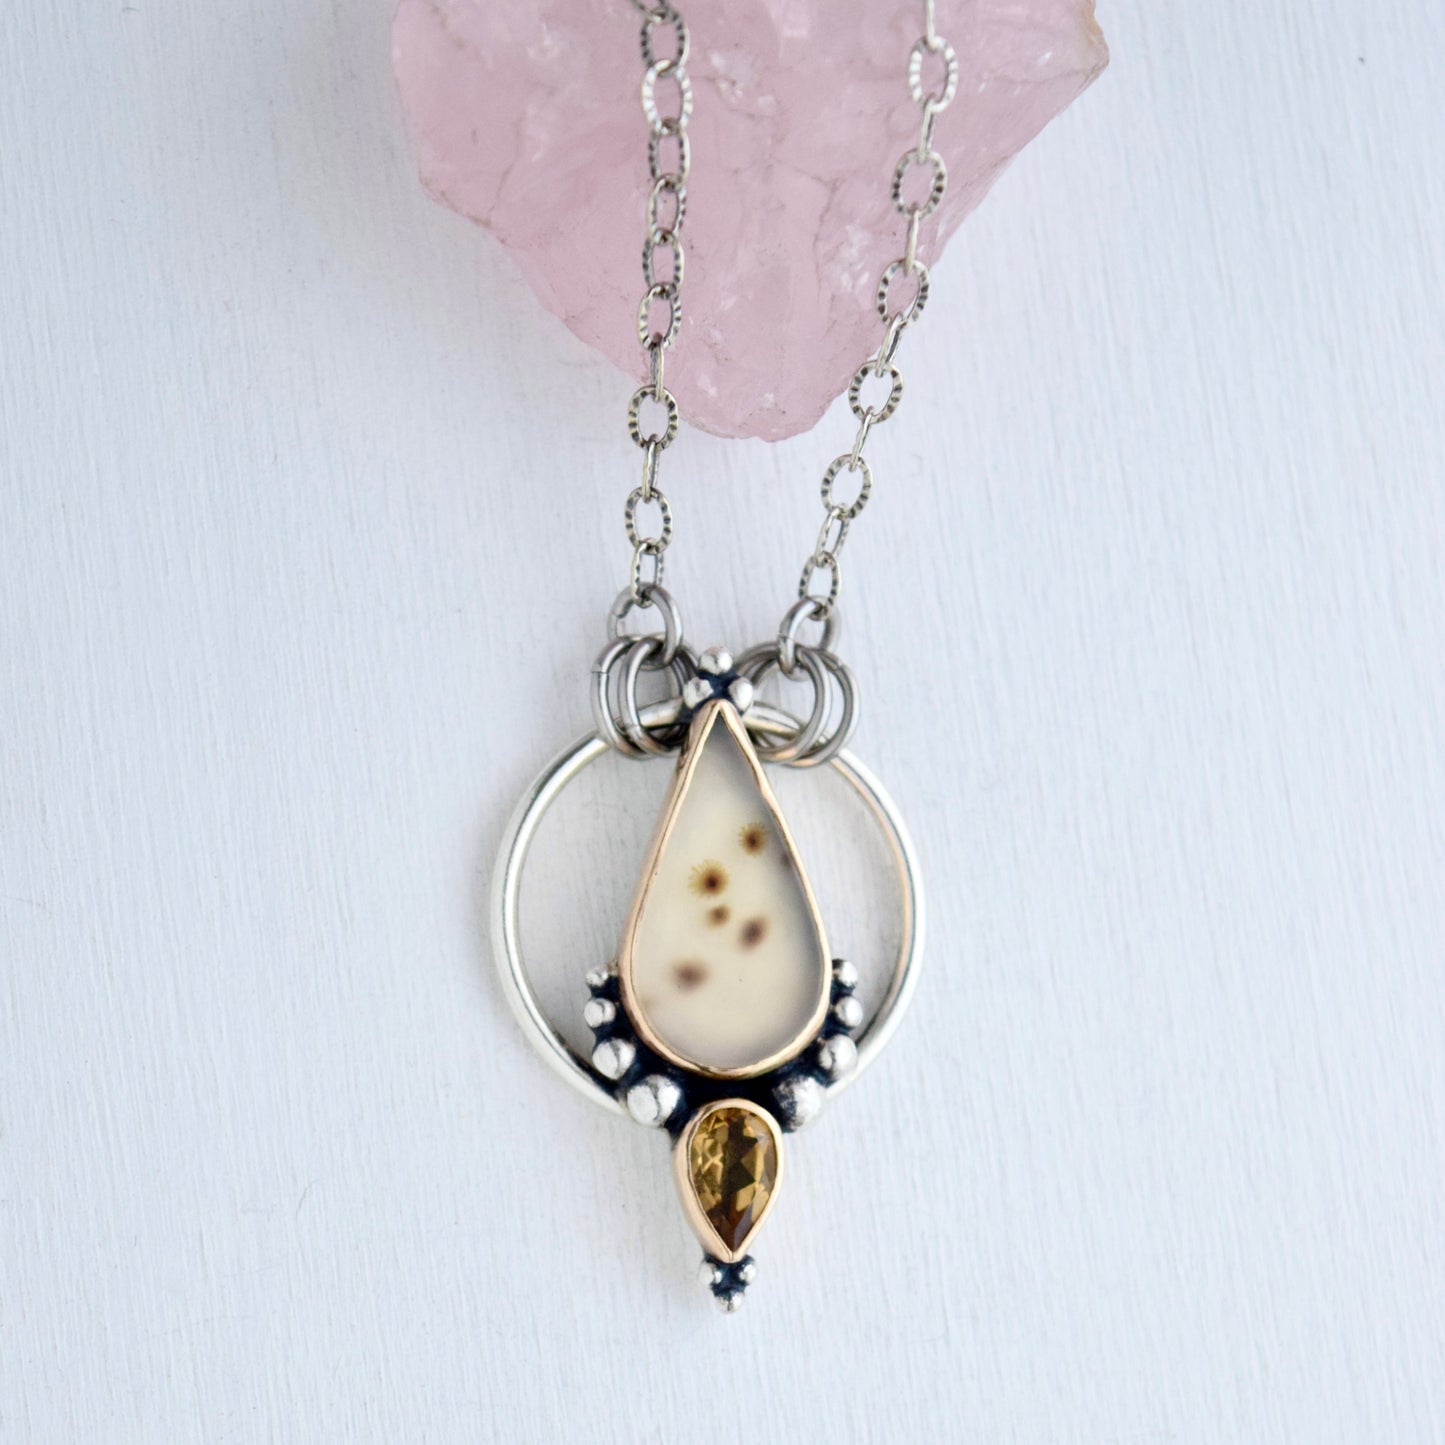 Pendulum Pendant with Scenic Dendritic Agate, Gold Fill, and Citrine